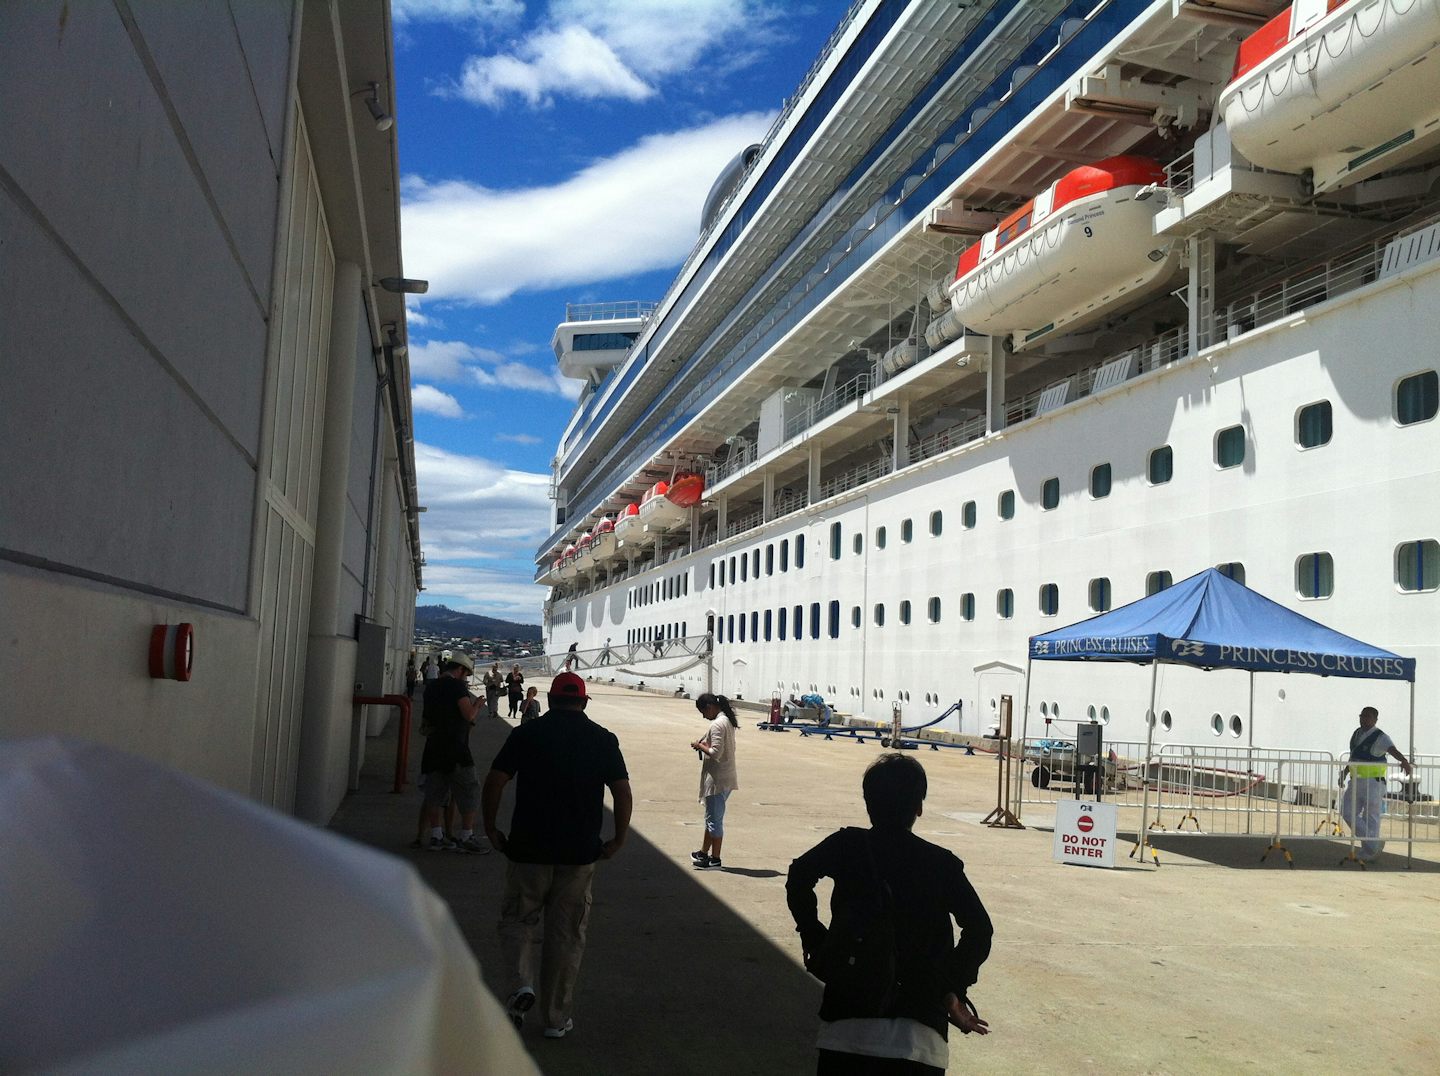 Docked in Hobart